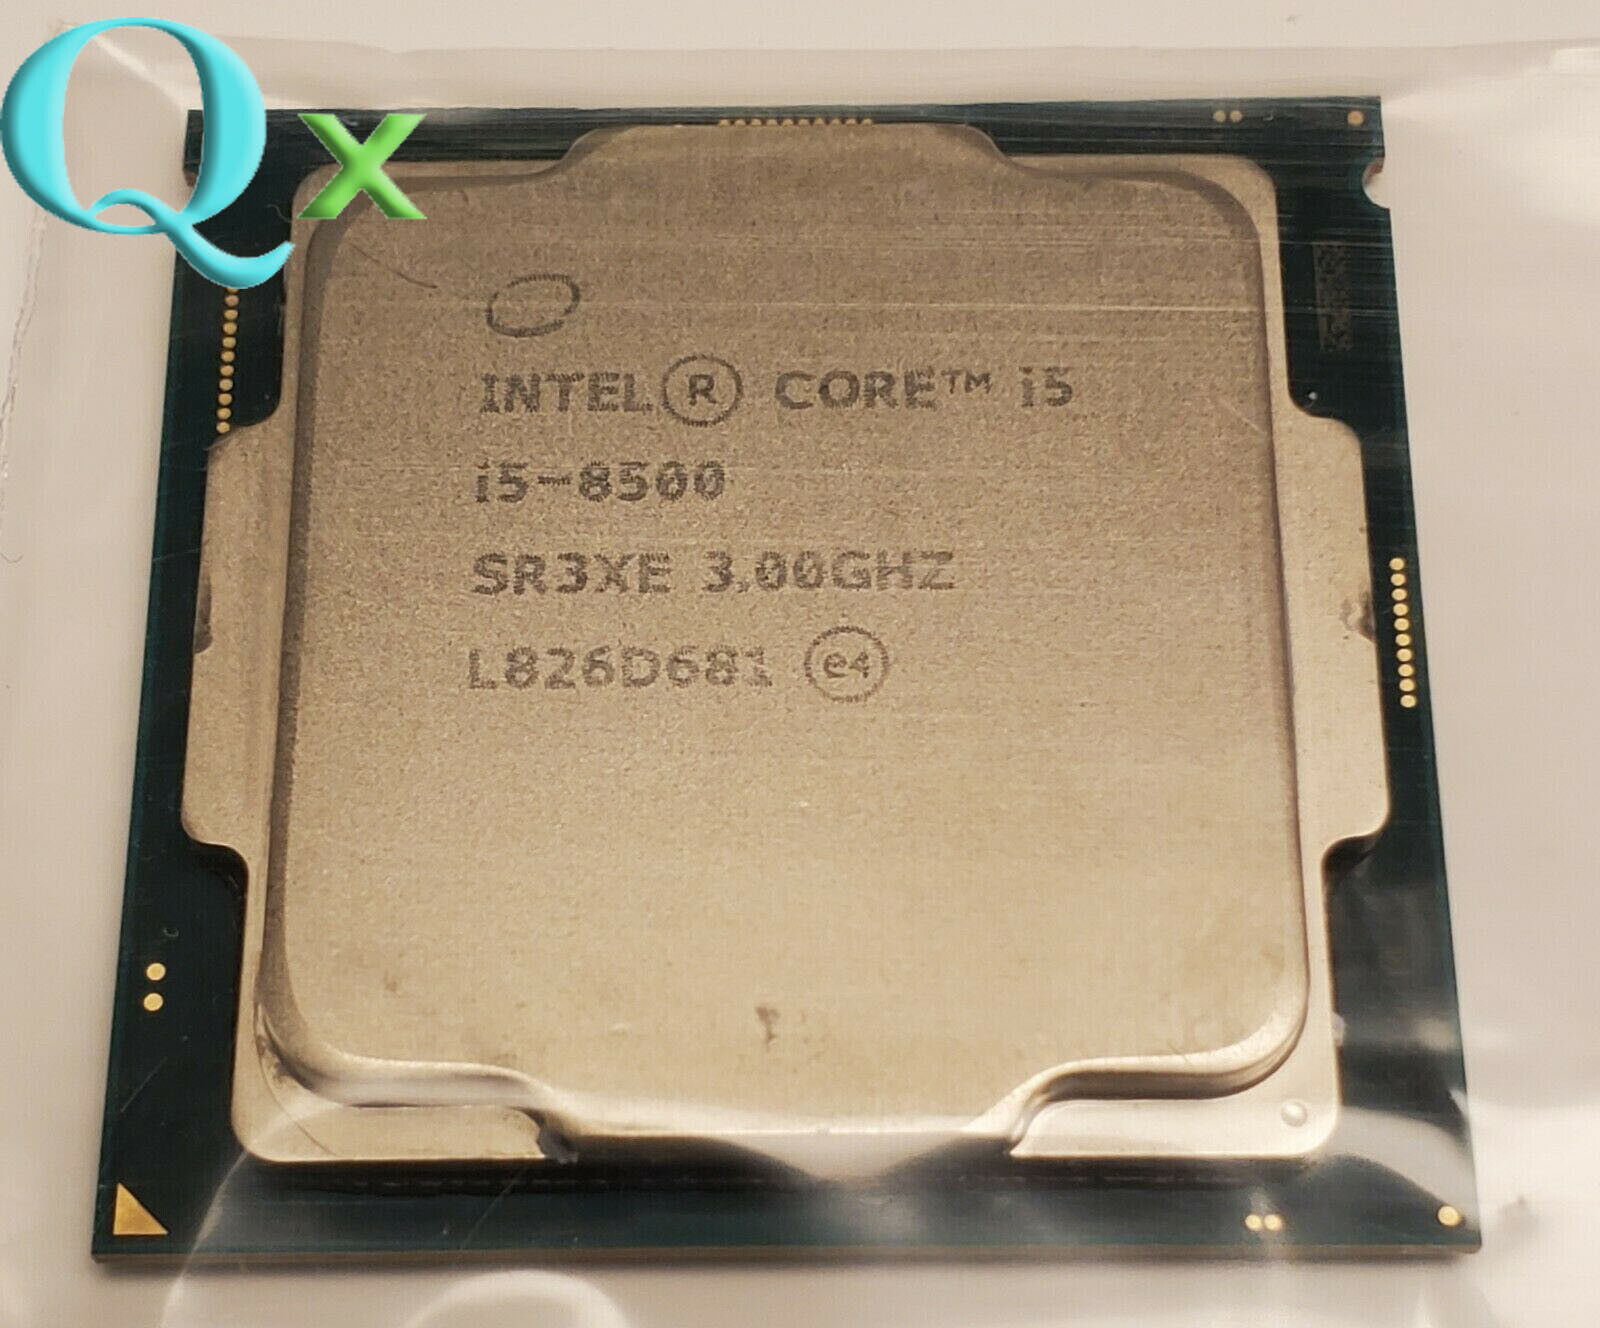 stijl Correspondentie liefdadigheid 8Th Gen Intel Core i5-8500 LGA1151 CPU Processor SR3XE 3.00GHz 6 Core 6  Threads | eBay